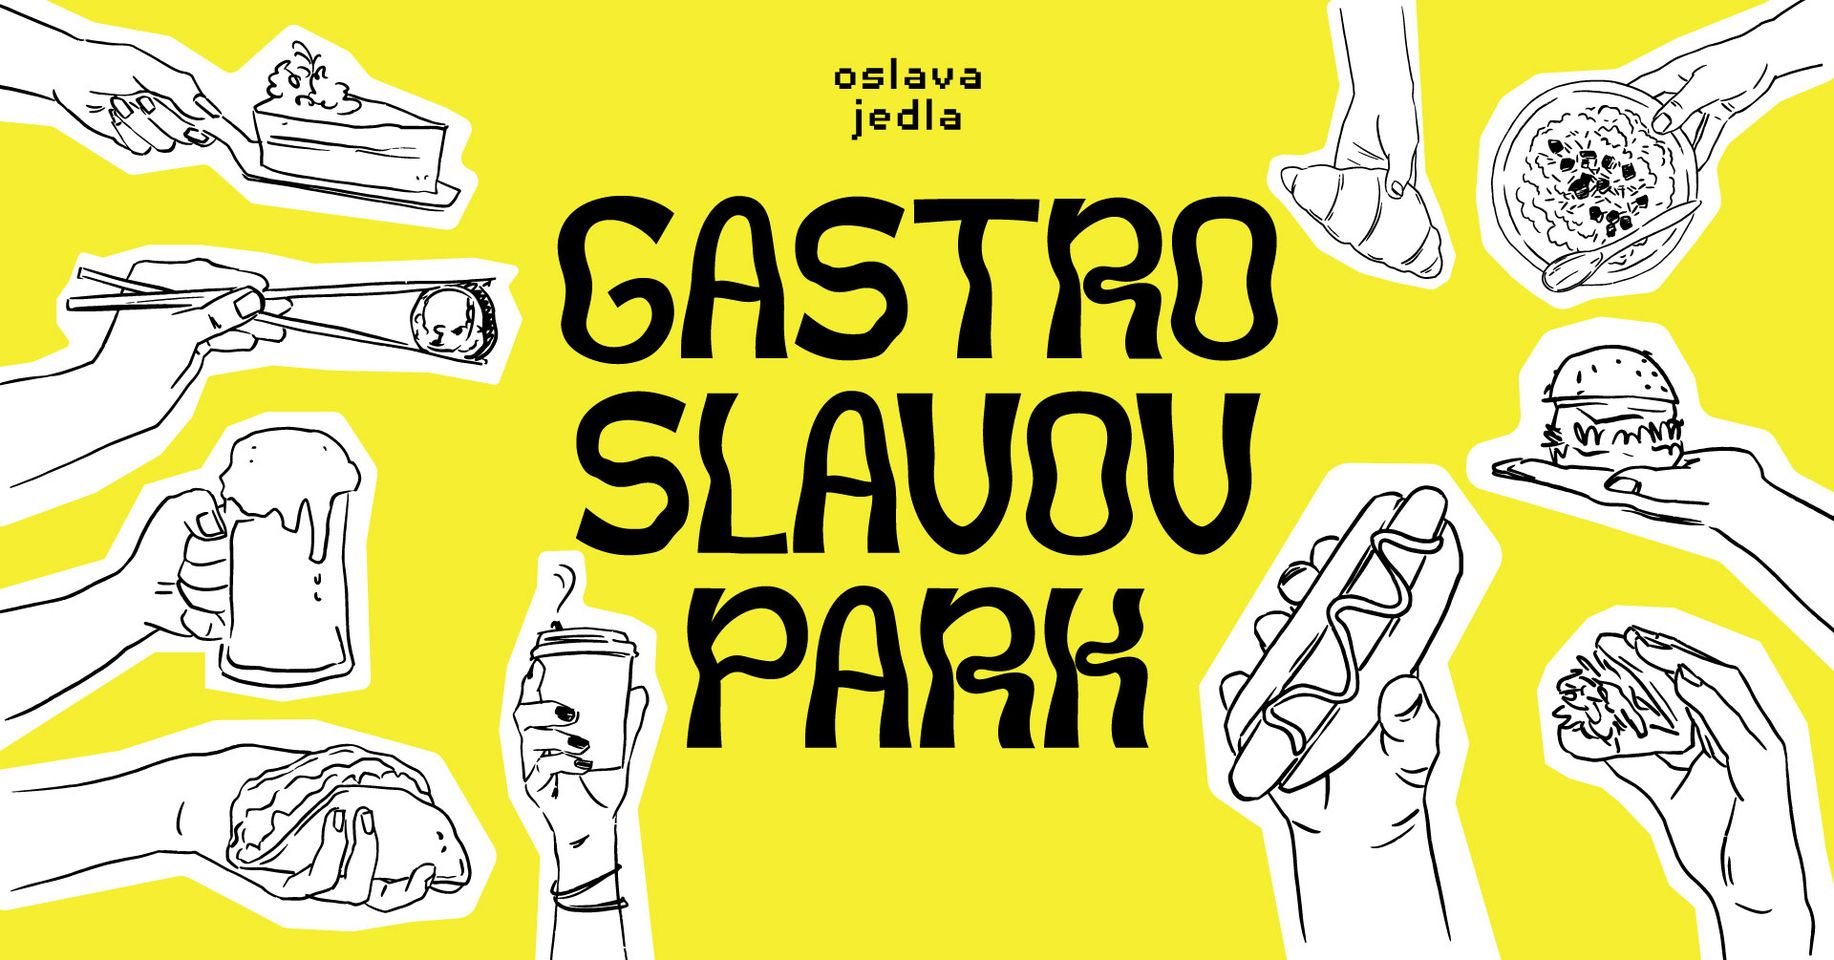 Gastroslavov park Hviezdoslavov park